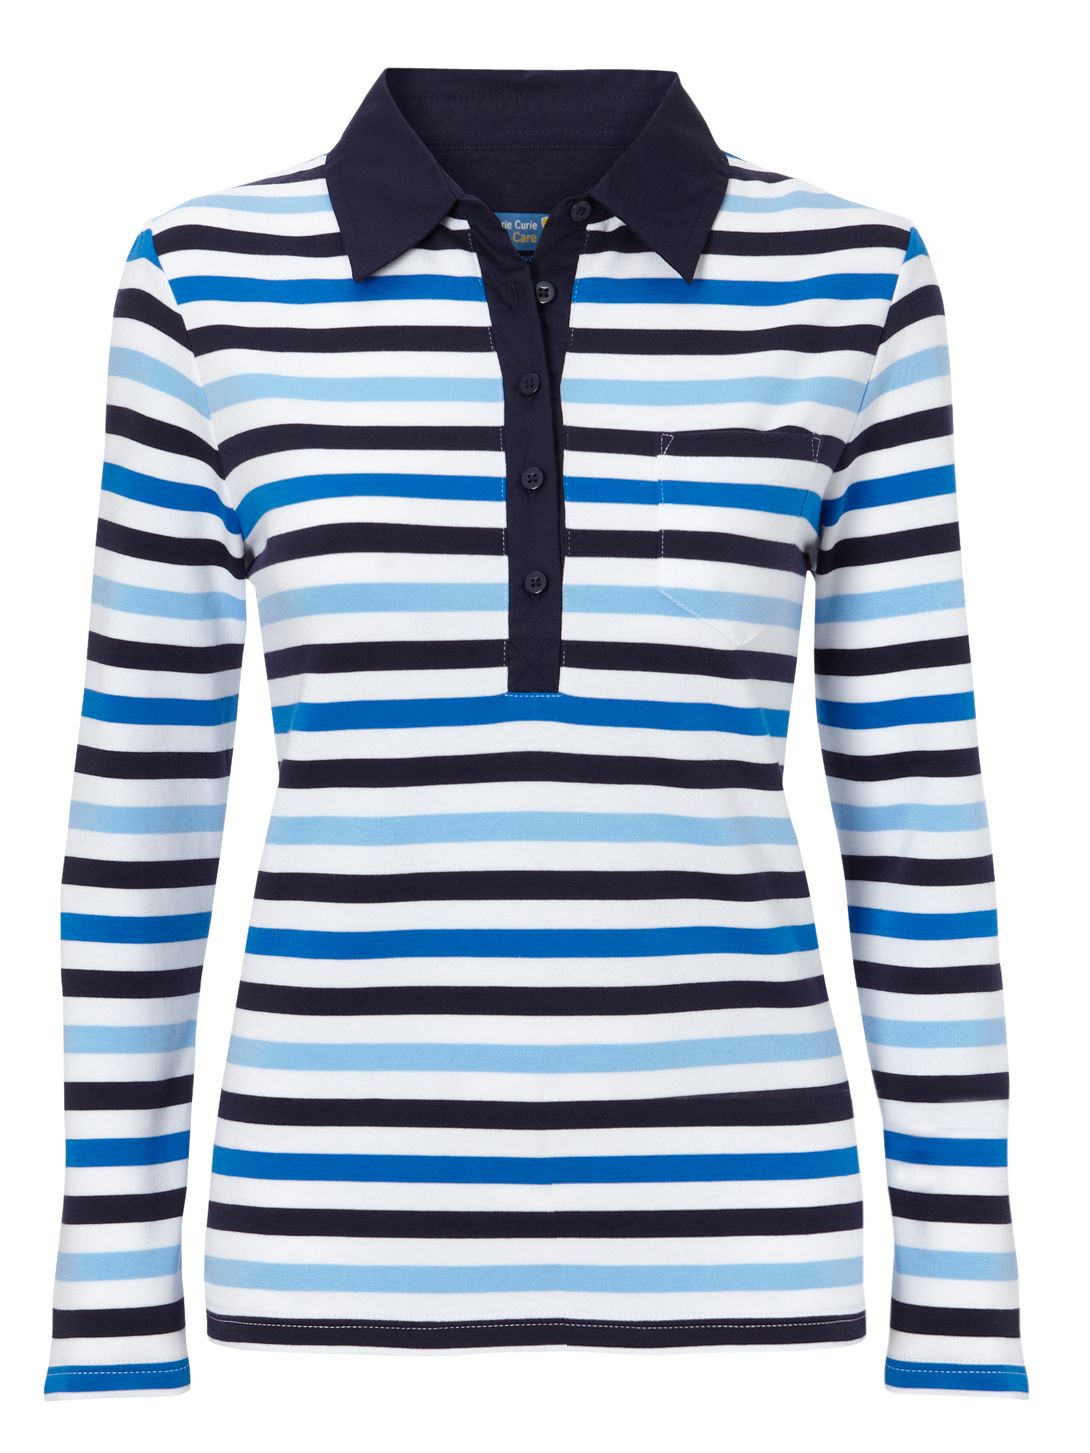 Viyella Long Sleeve Stripe Rugby Shirt, Blue